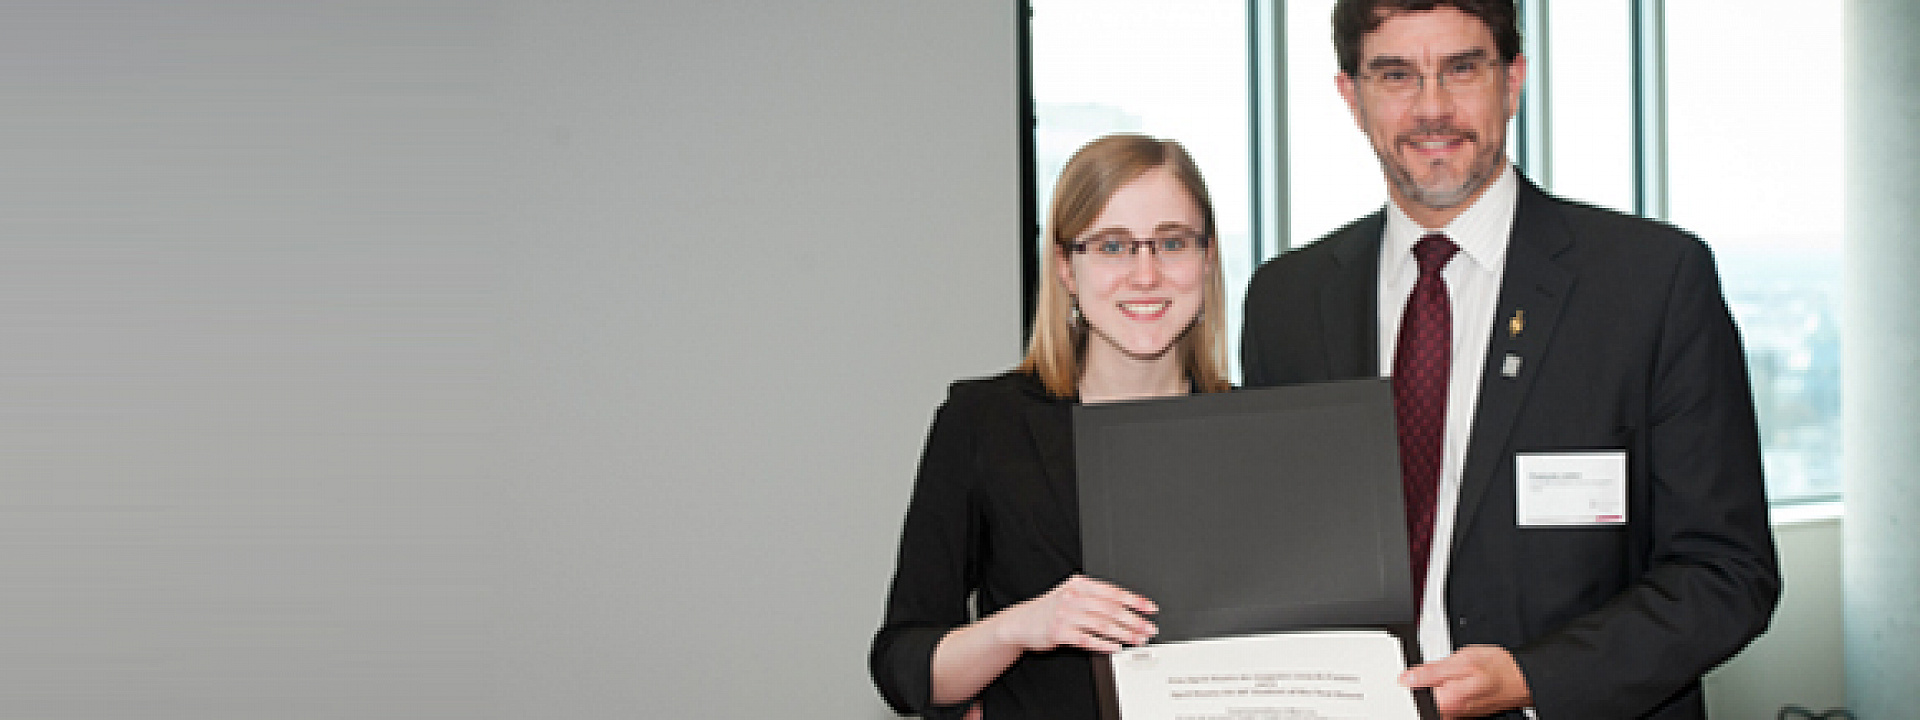 Samantha Harris, with Dean François Julien, holding a certificate